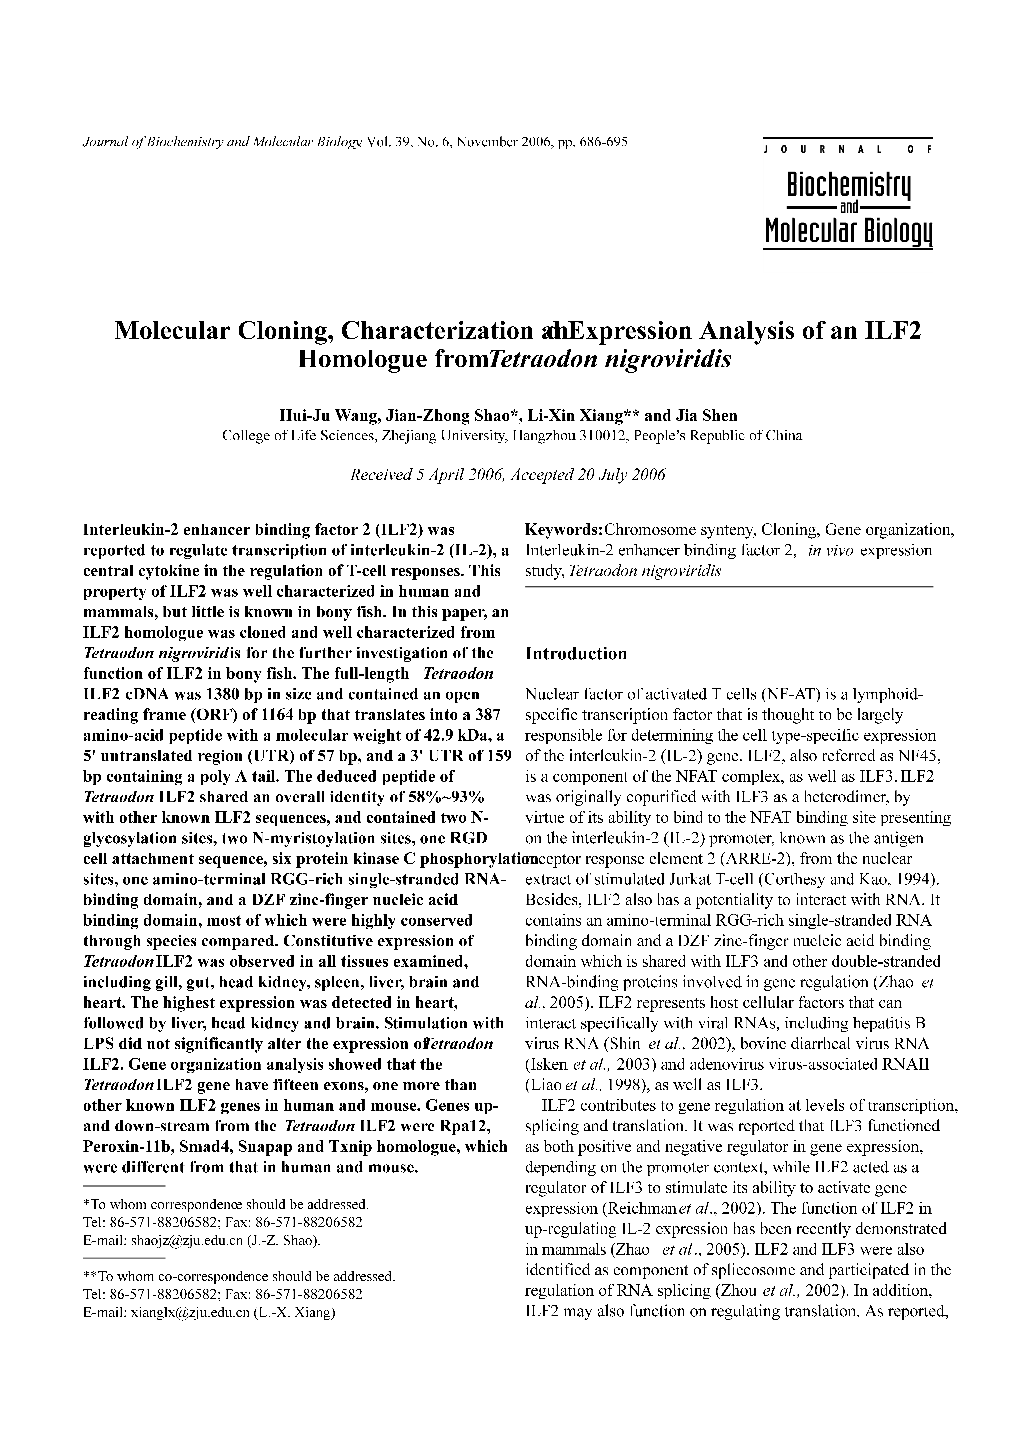 Molecular Cloning, Characterization and Expression Analysis of an ILF2 Homologue from Tetraodon Nigroviridis